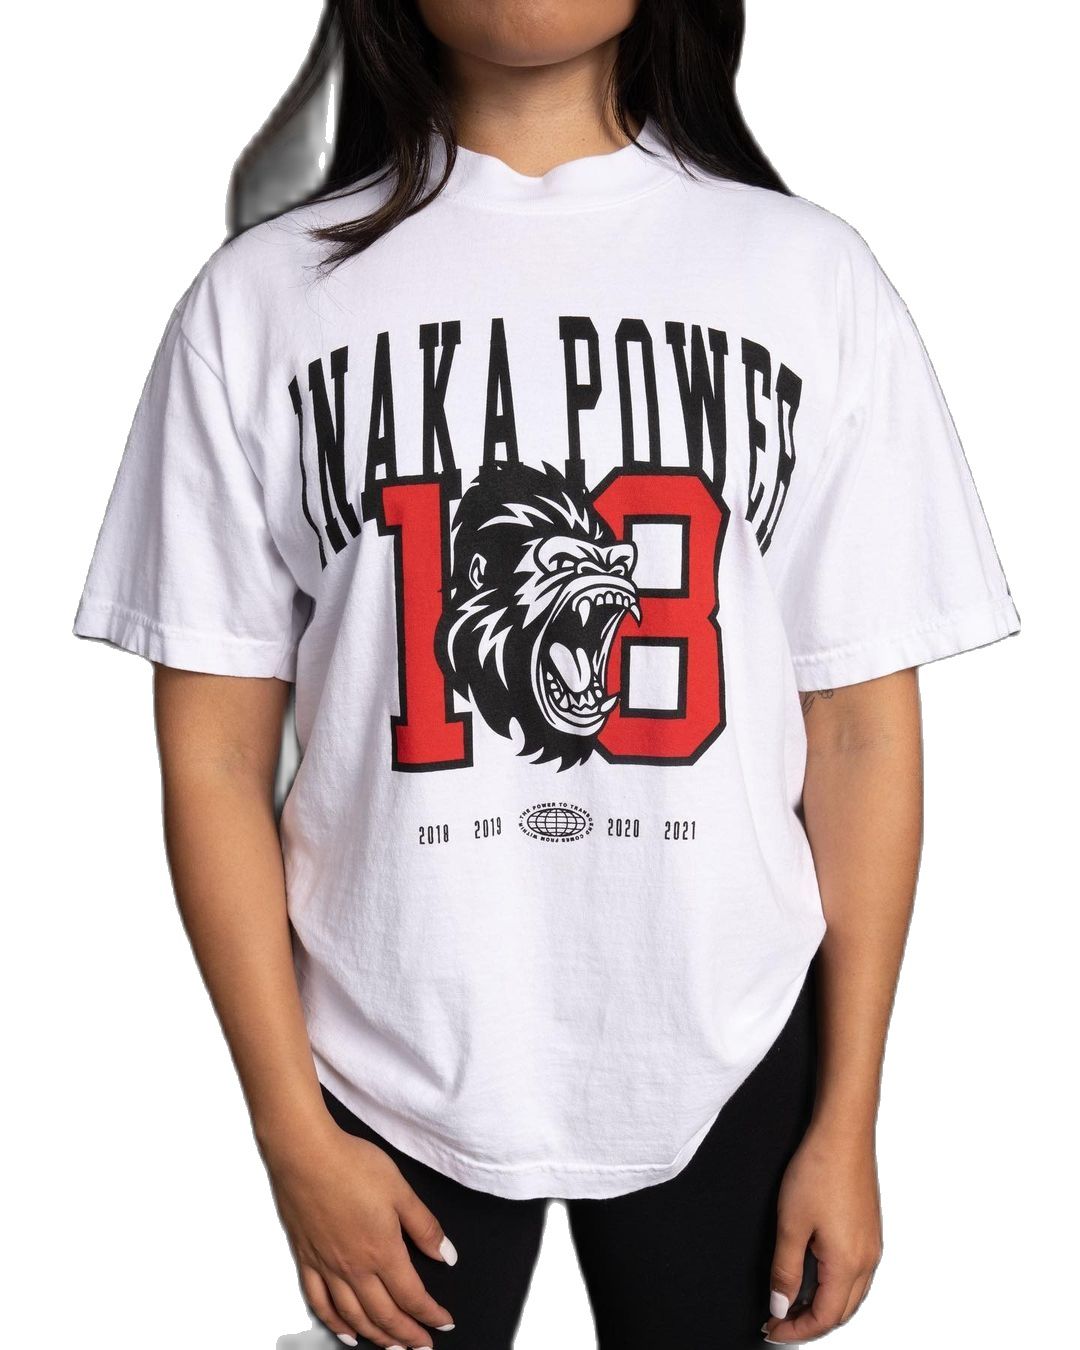 Power for Power T Shirt